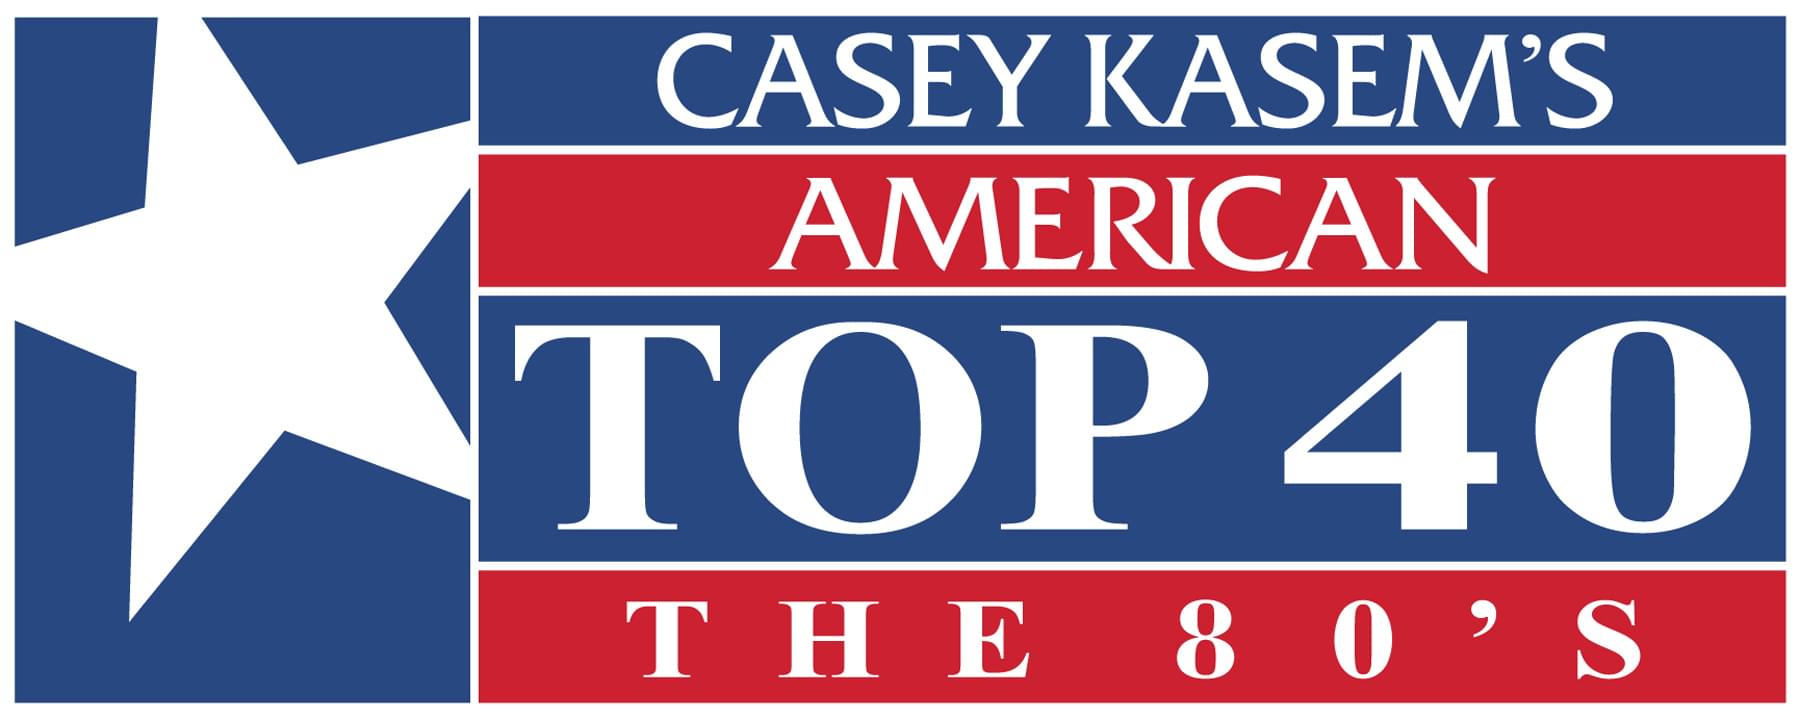 Casey Kasem’s American Top 40: The 80’s